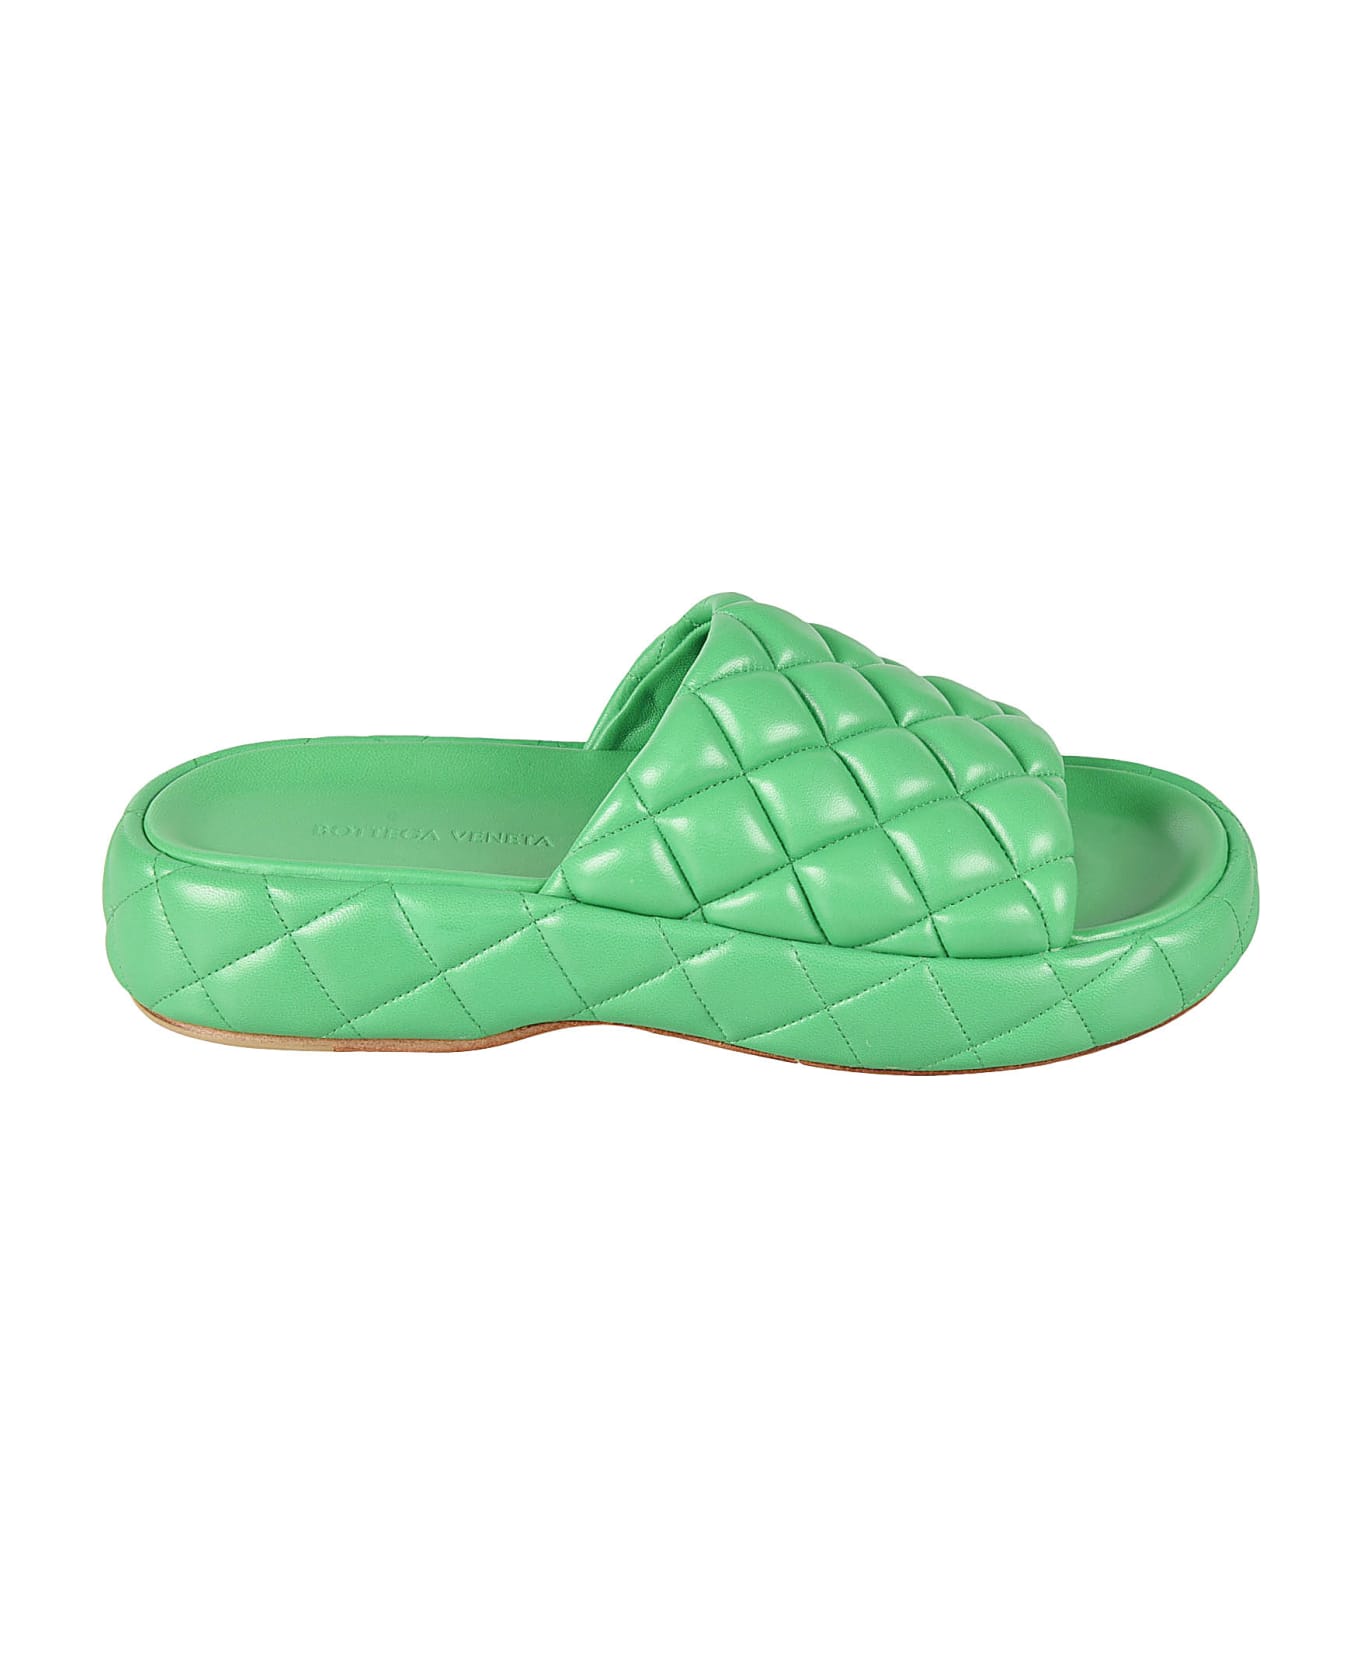 Bottega Veneta Padded Flat Sandals - Parakeet